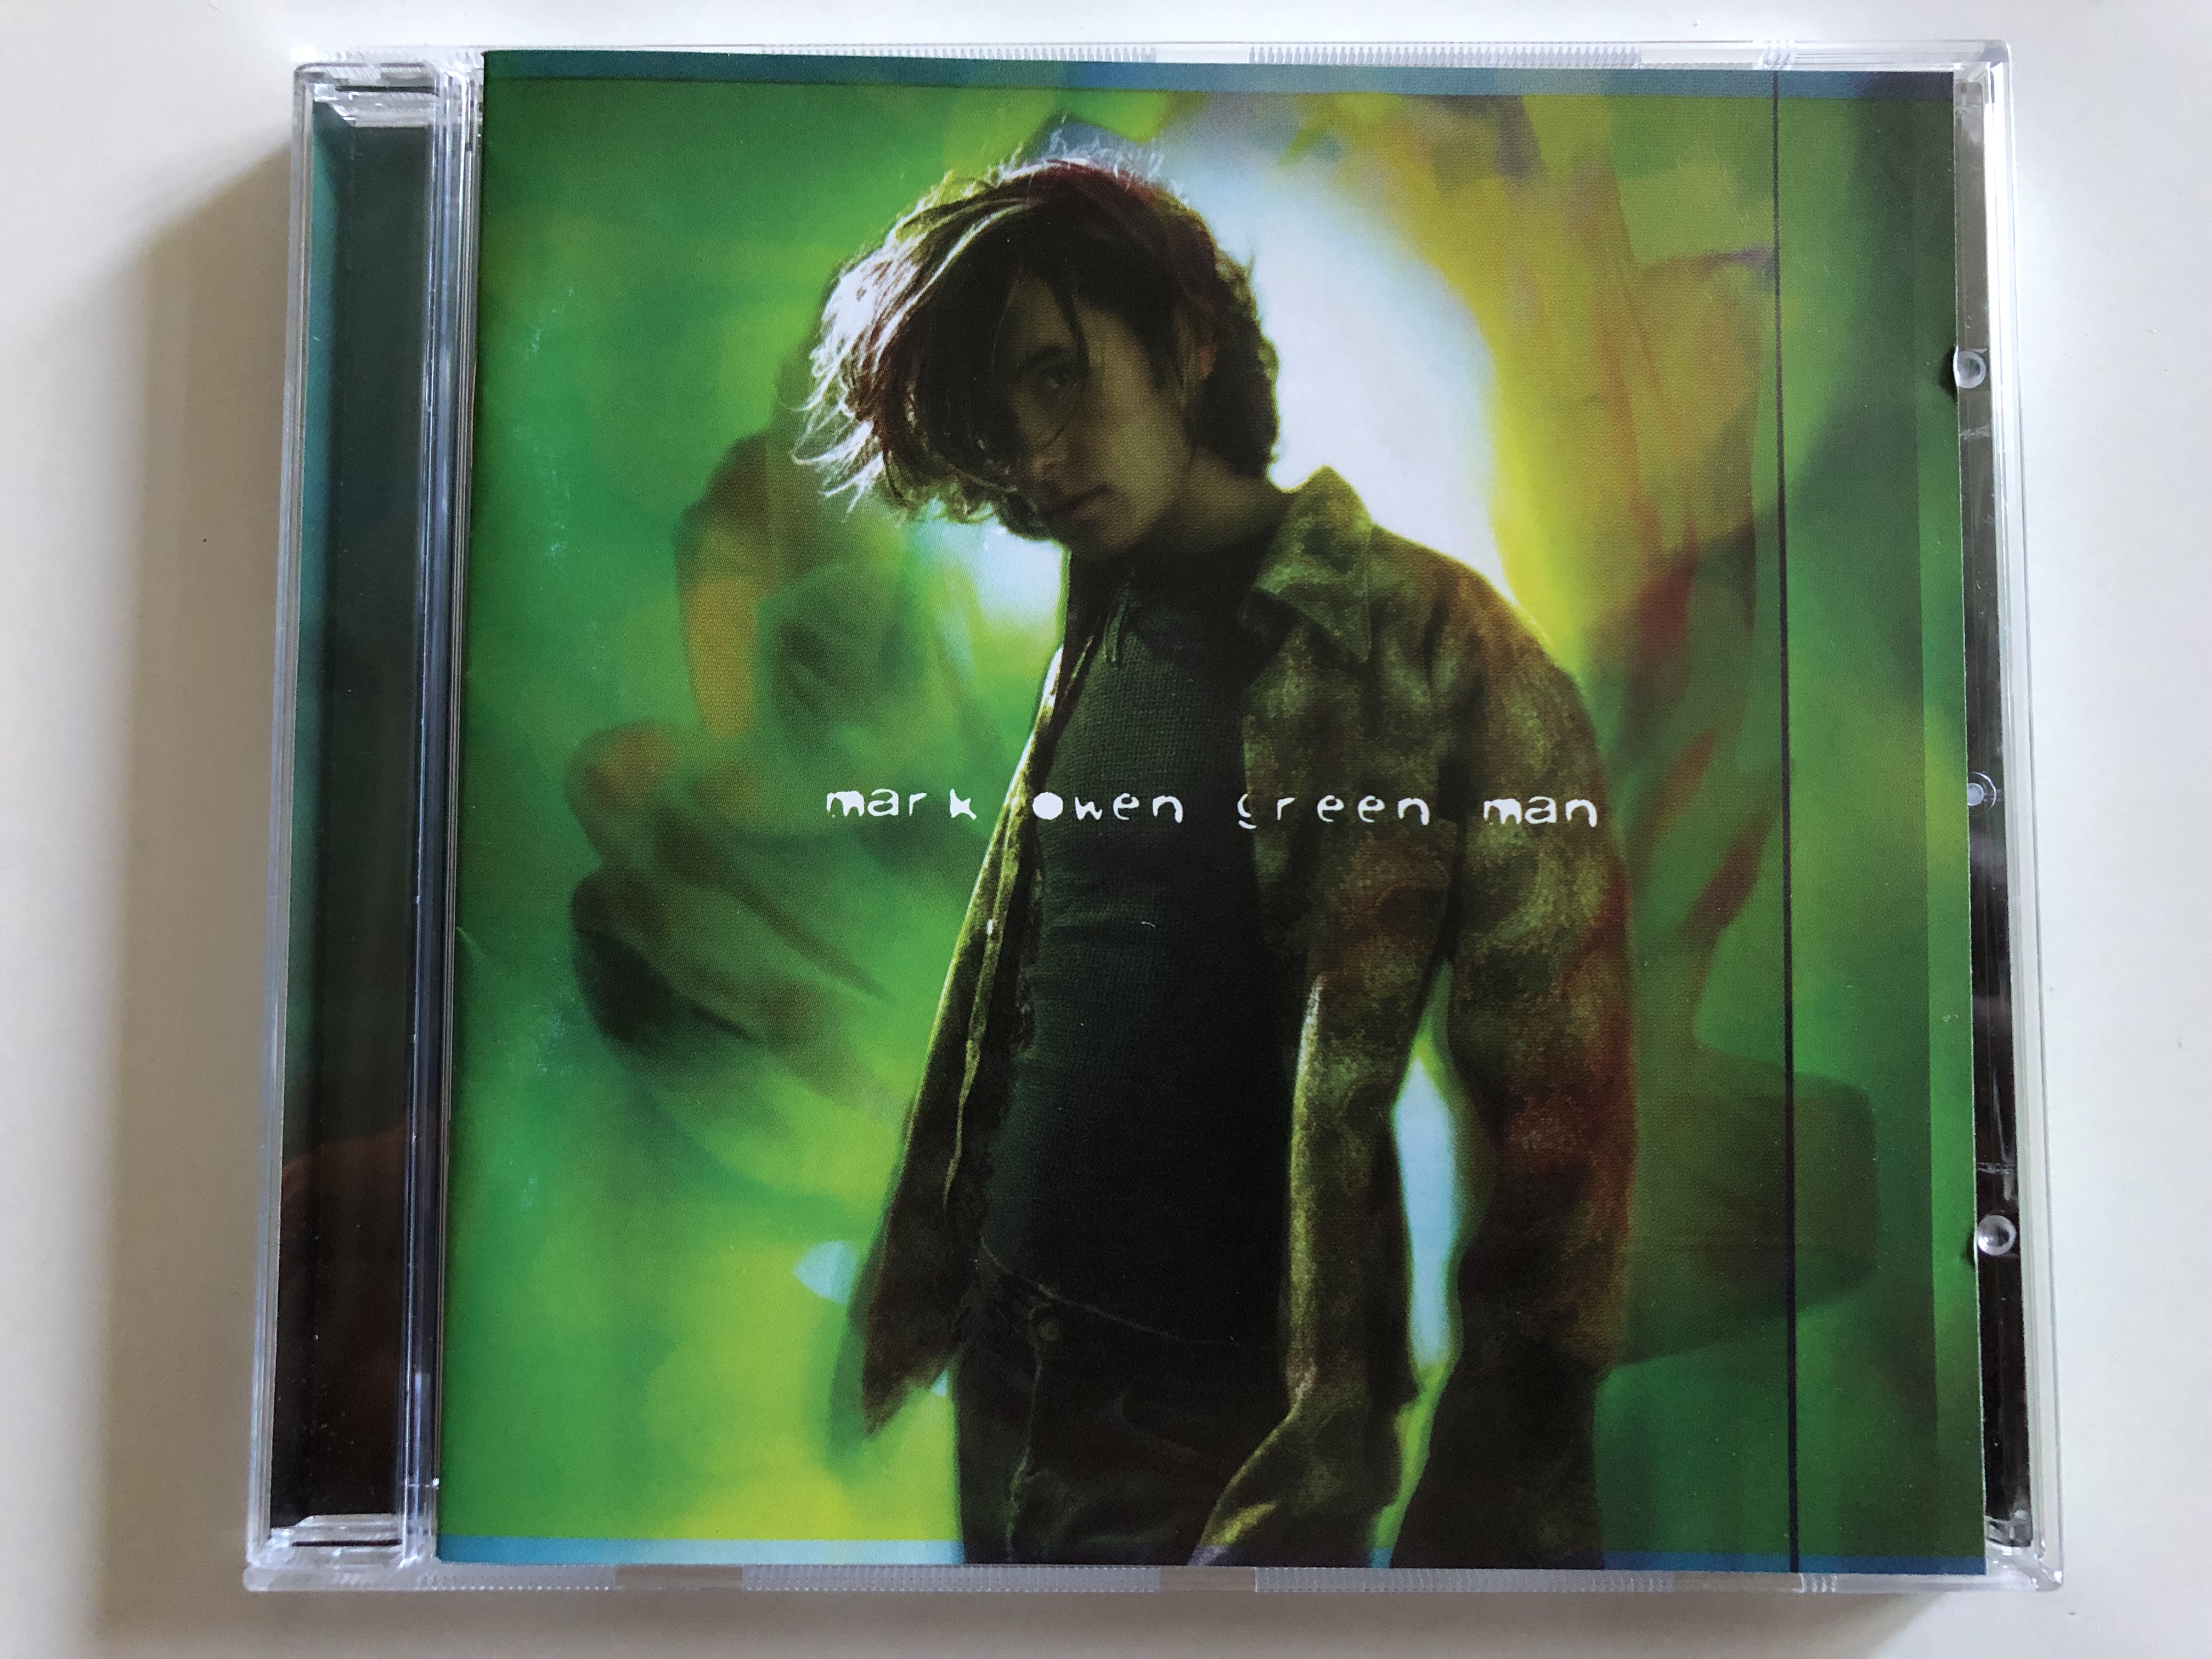 mark-owen-green-man-rca-audio-cd-1996-74321-43514-2-1-.jpg